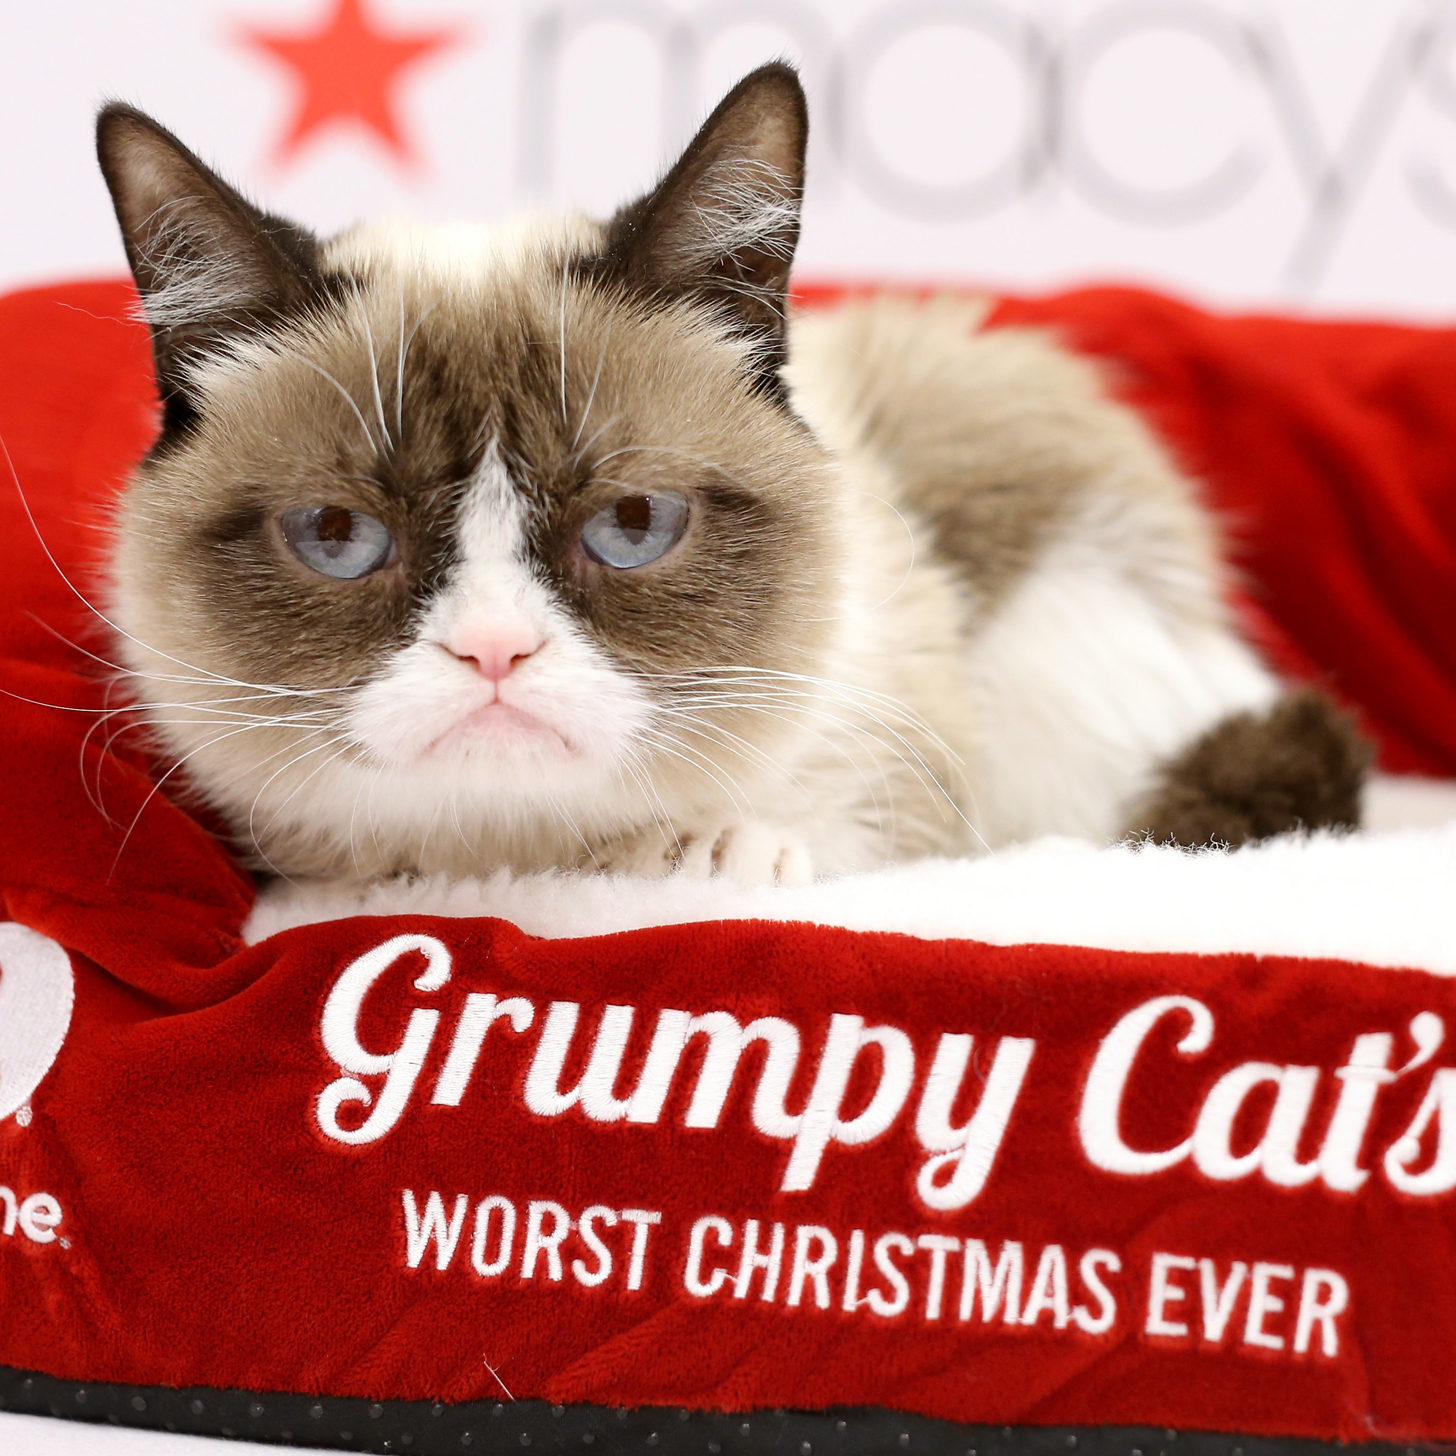 Grumpy Christmas Cat Worst Ever Peek Humor Celebrity Into Gifts Popsugar Do...